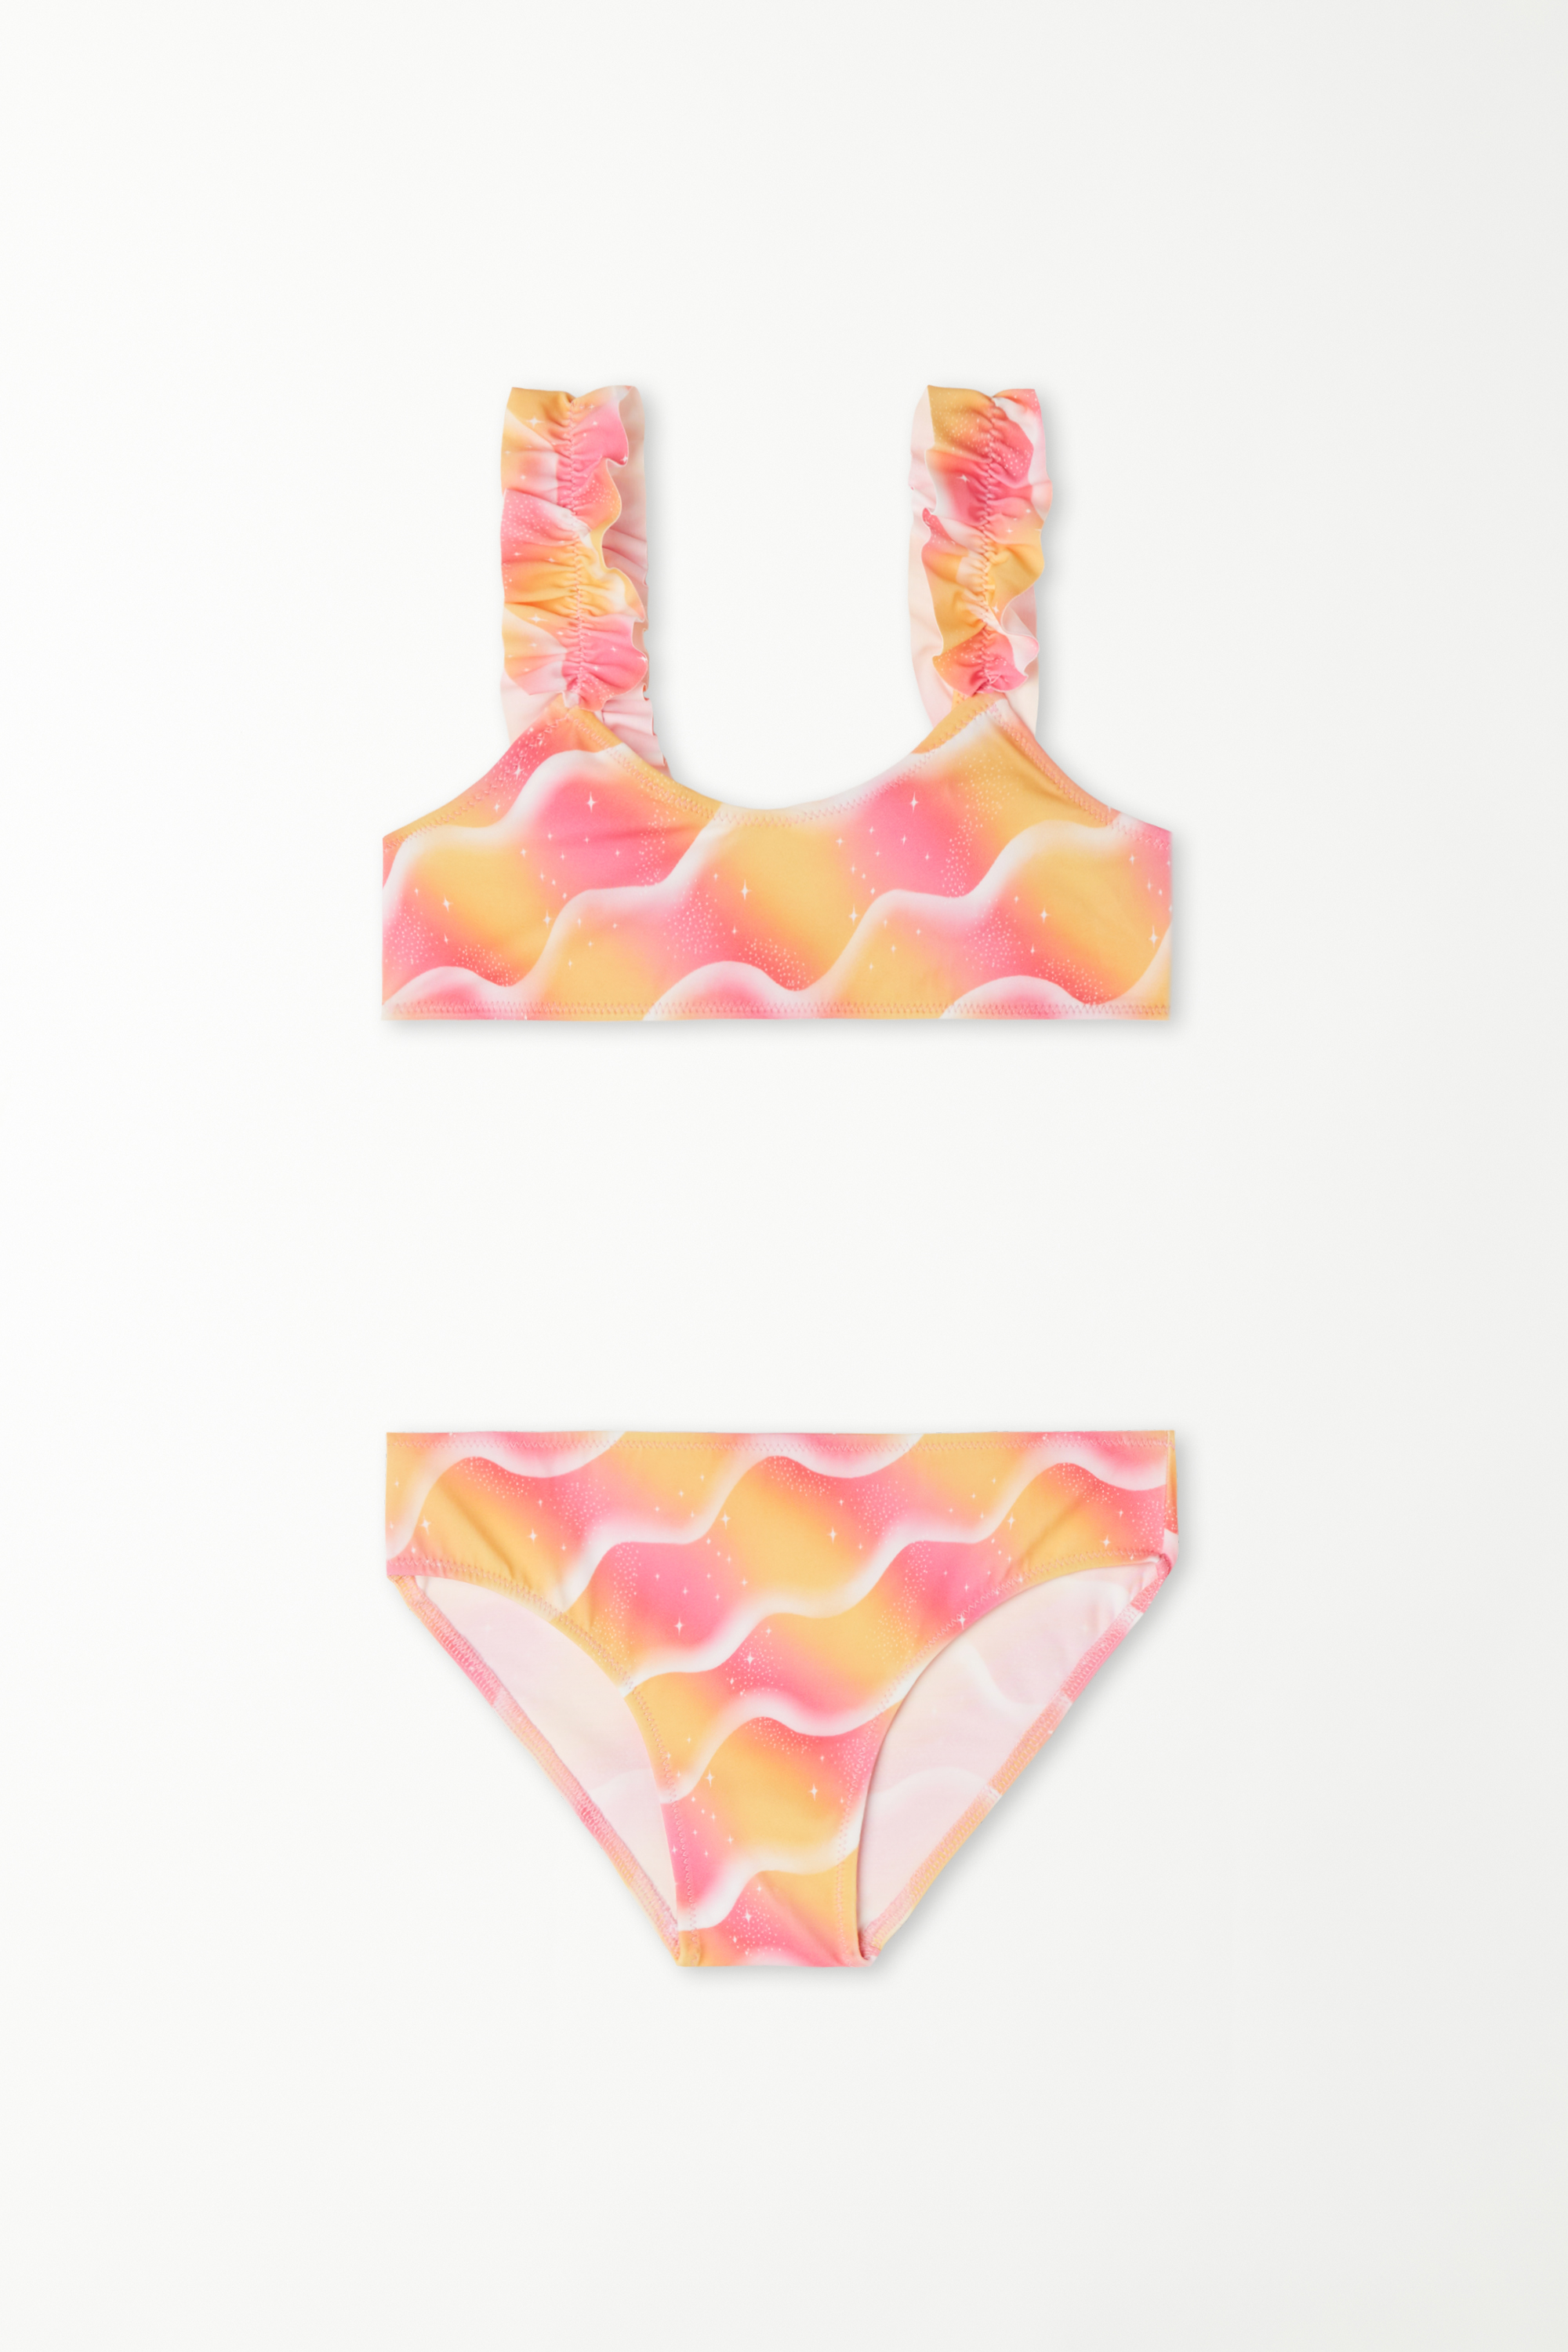 Girls’ Ruched Mermaid Bikini Top and Bottoms